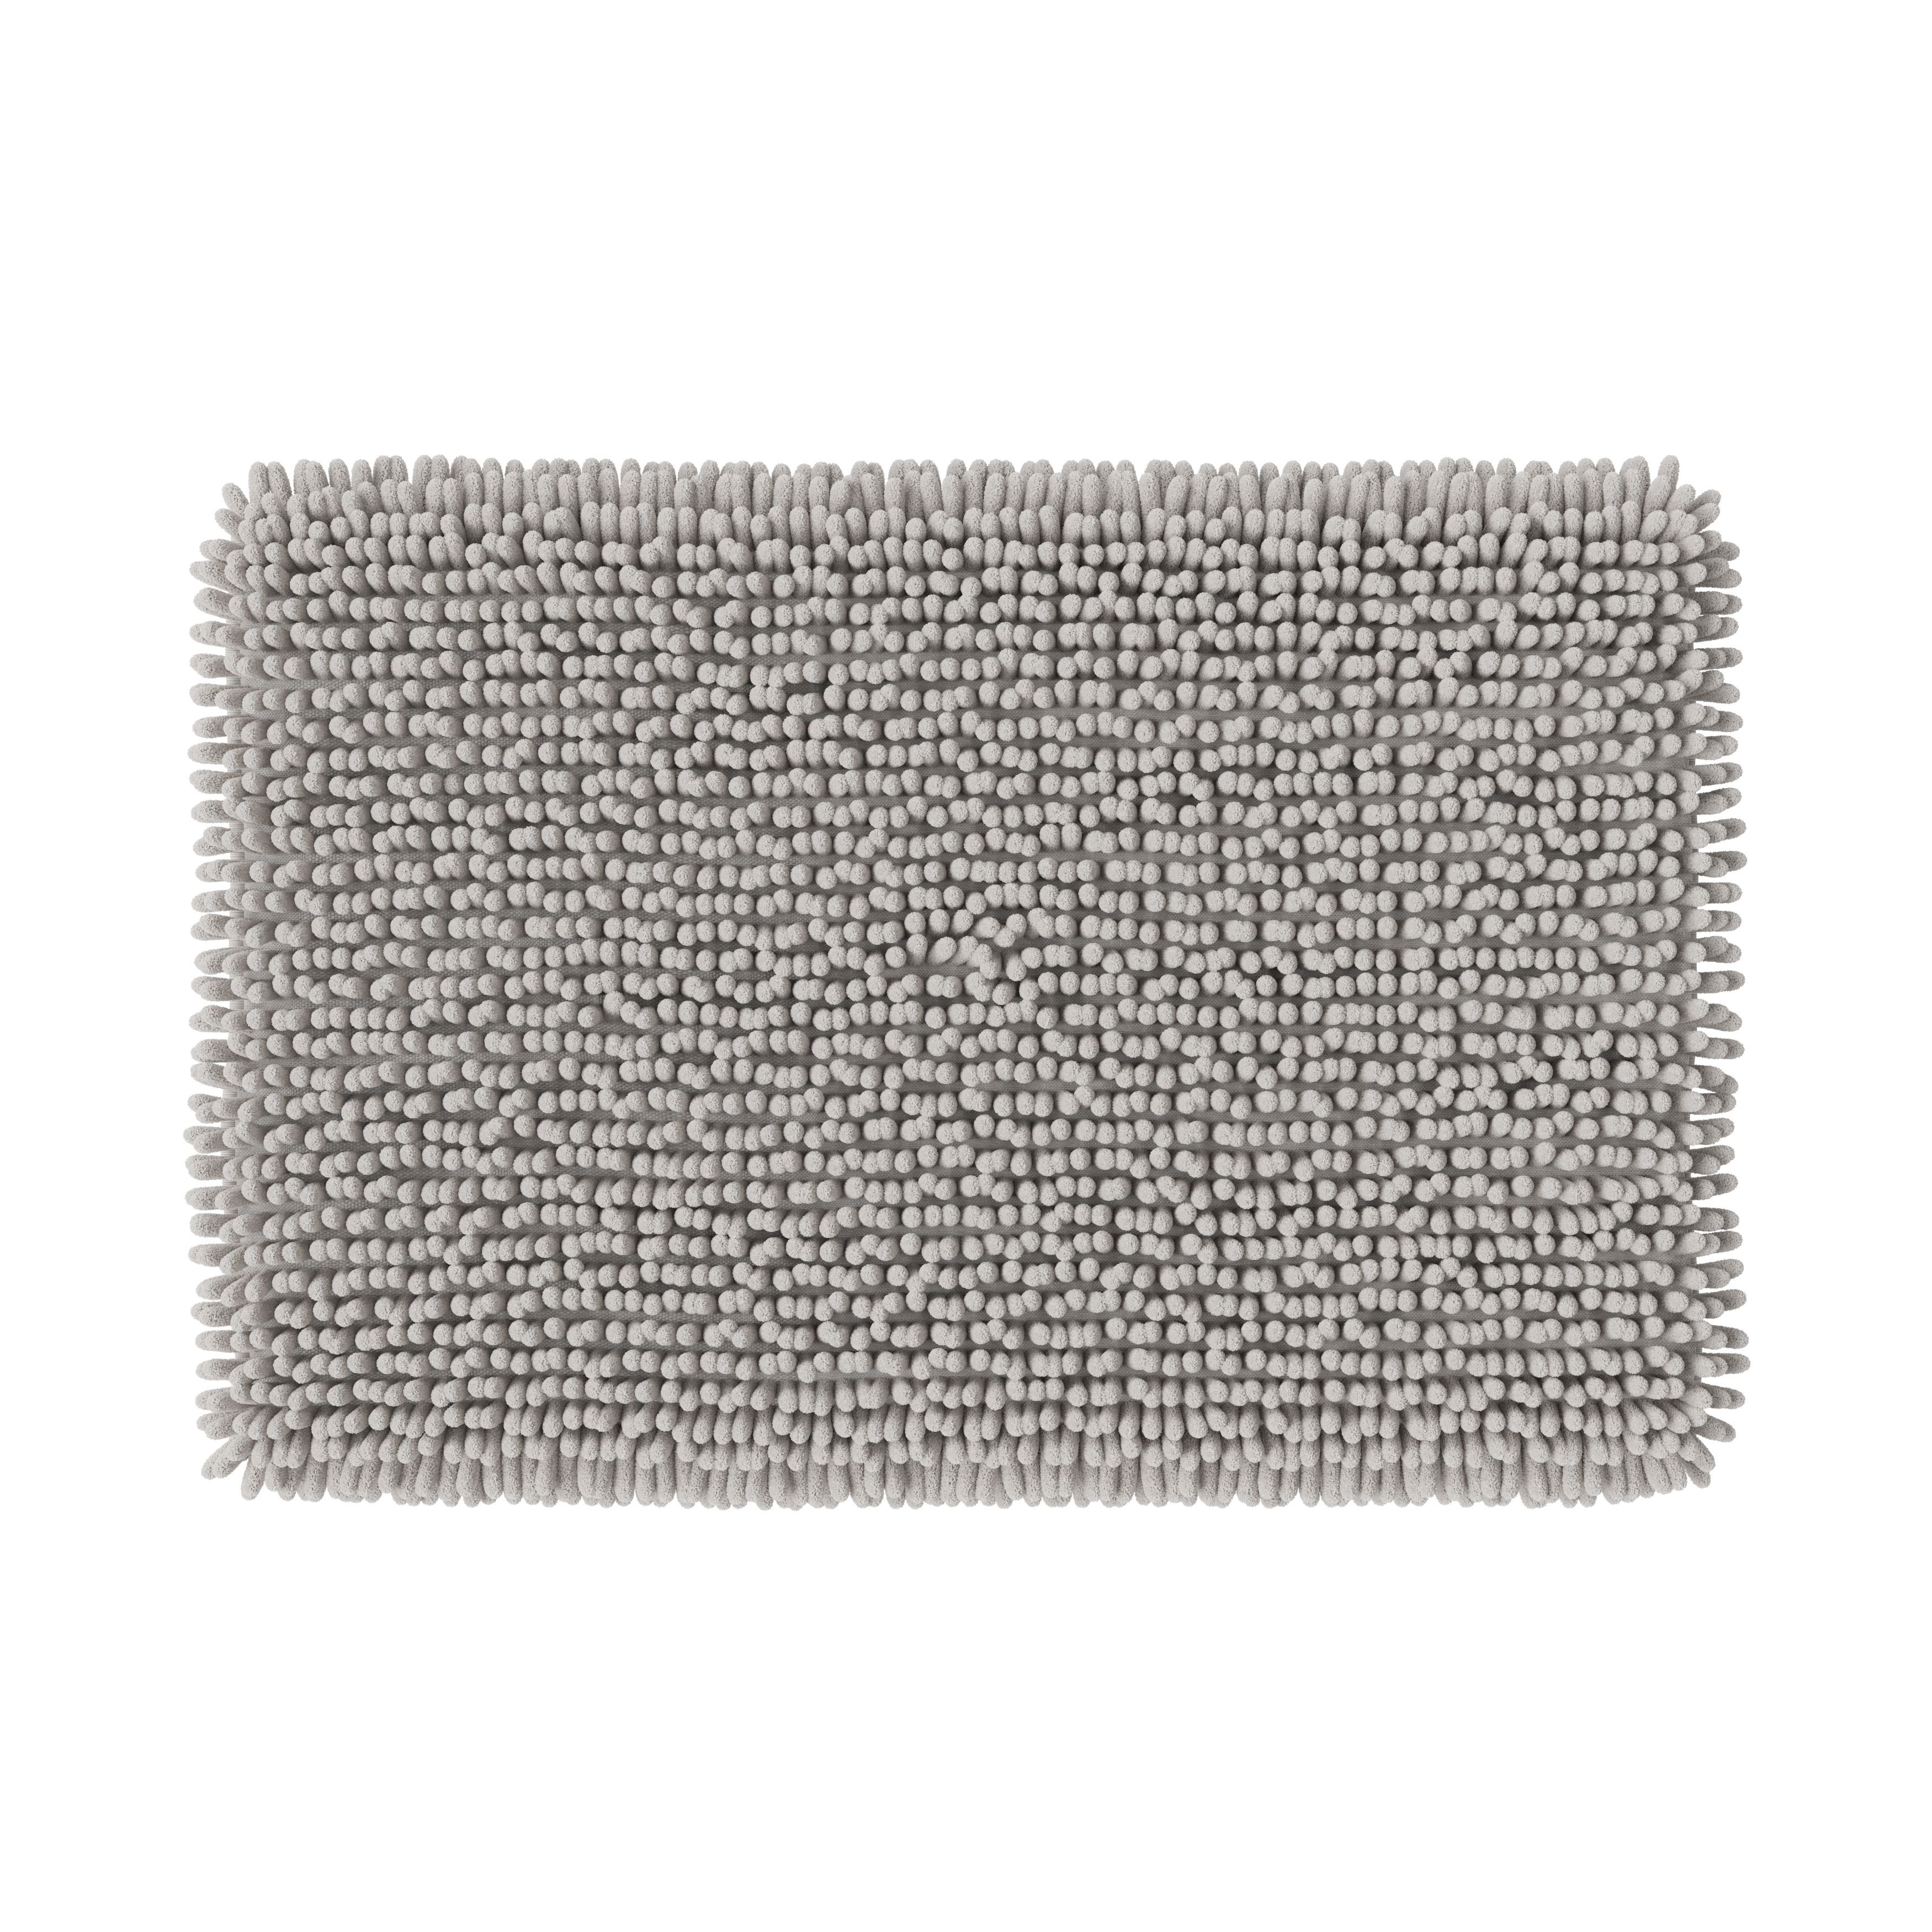 GoodHome Graphene Stone grey Rectangular Bath mat (L)80cm (W)50cm